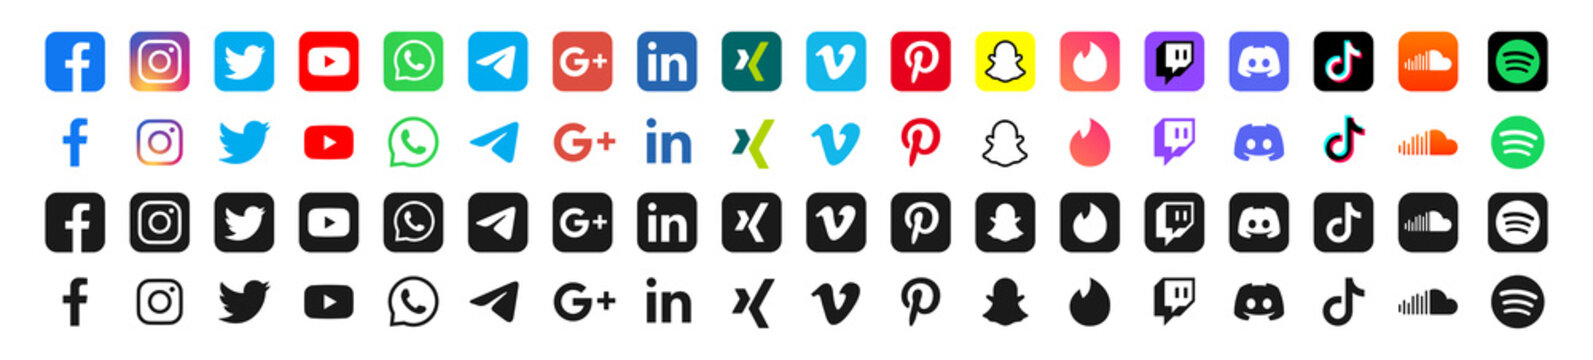 Social media vector icon set